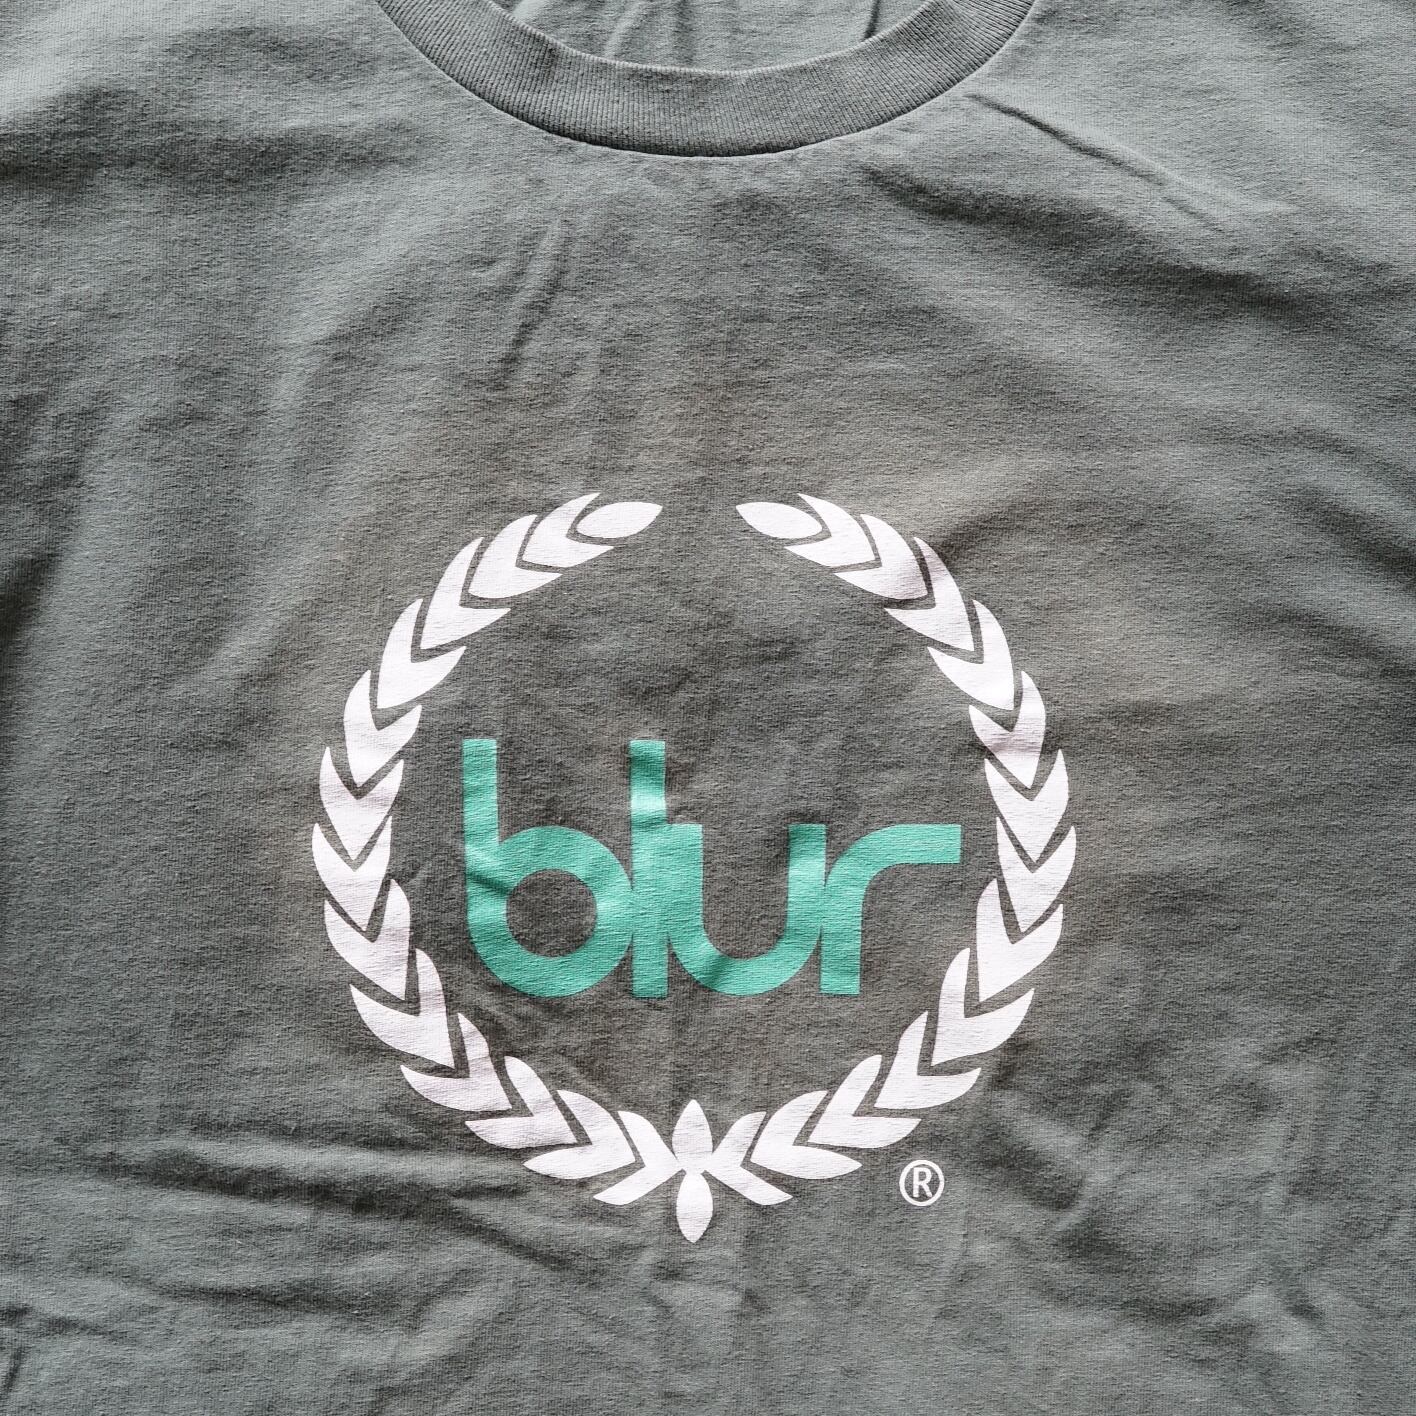 Blur 93 ビンテージ Tシャツ